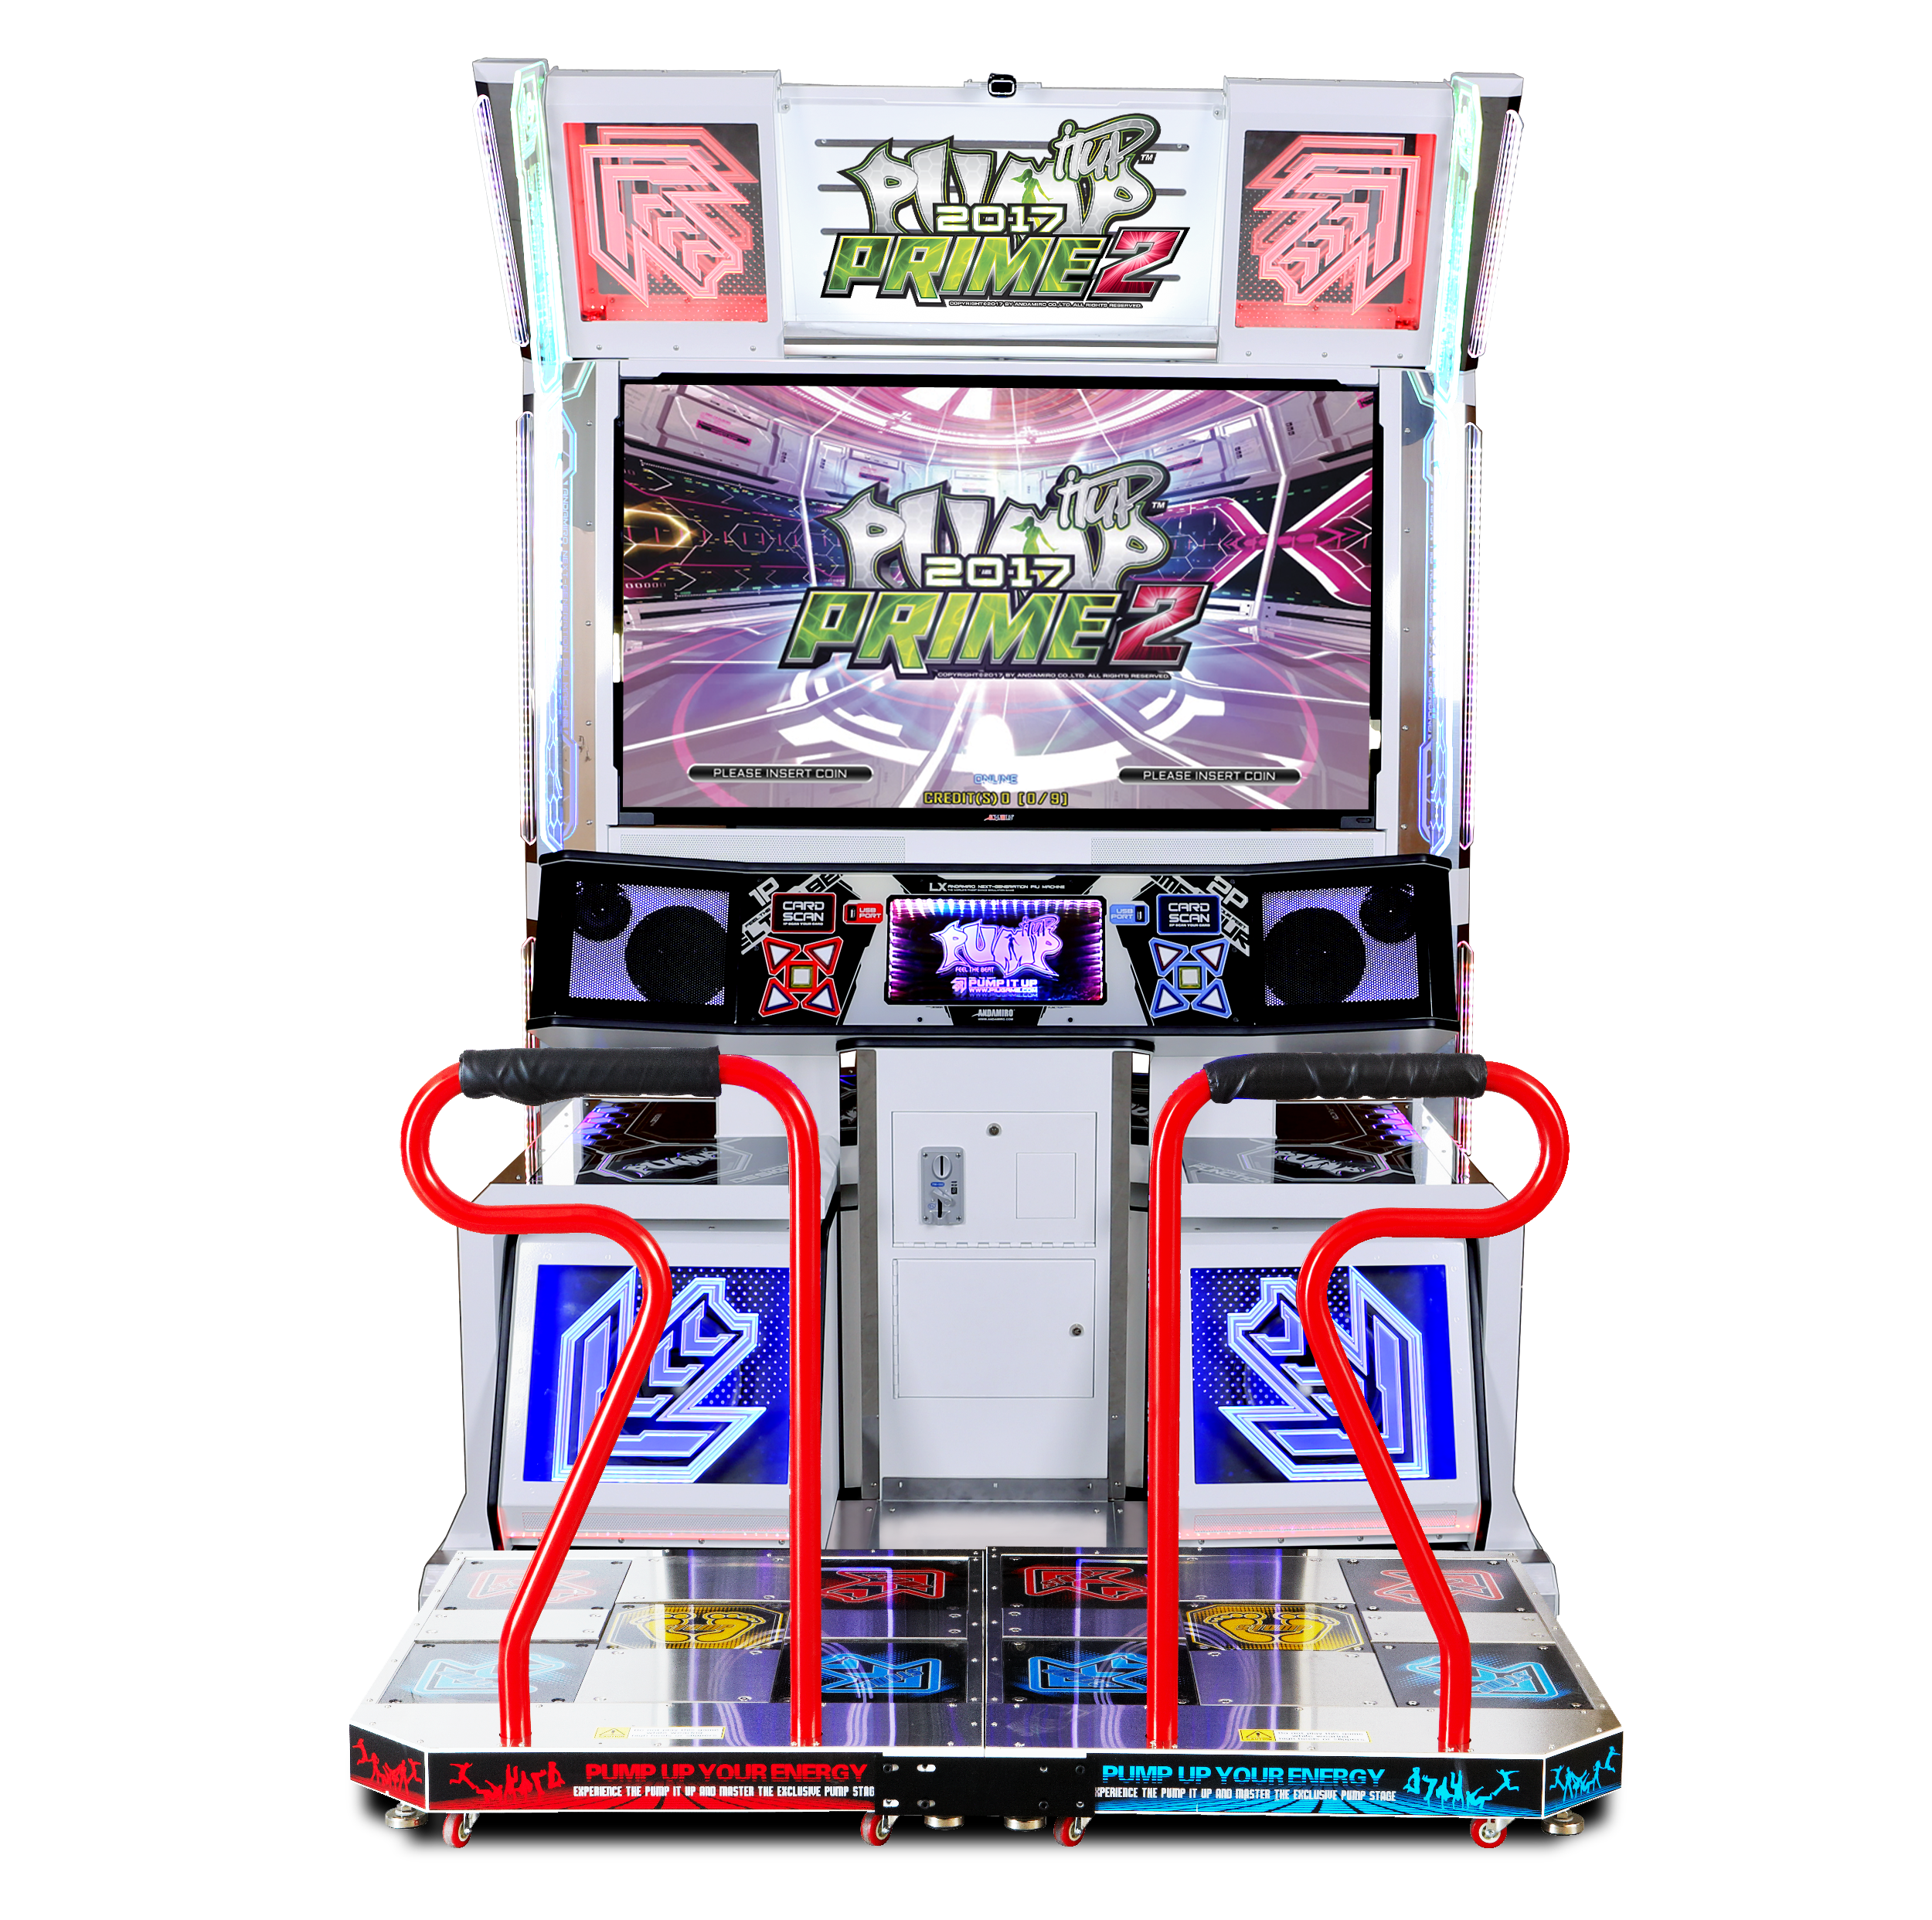 Pump It Up Prime2 (2017) Arcade Game - Andamiro USA